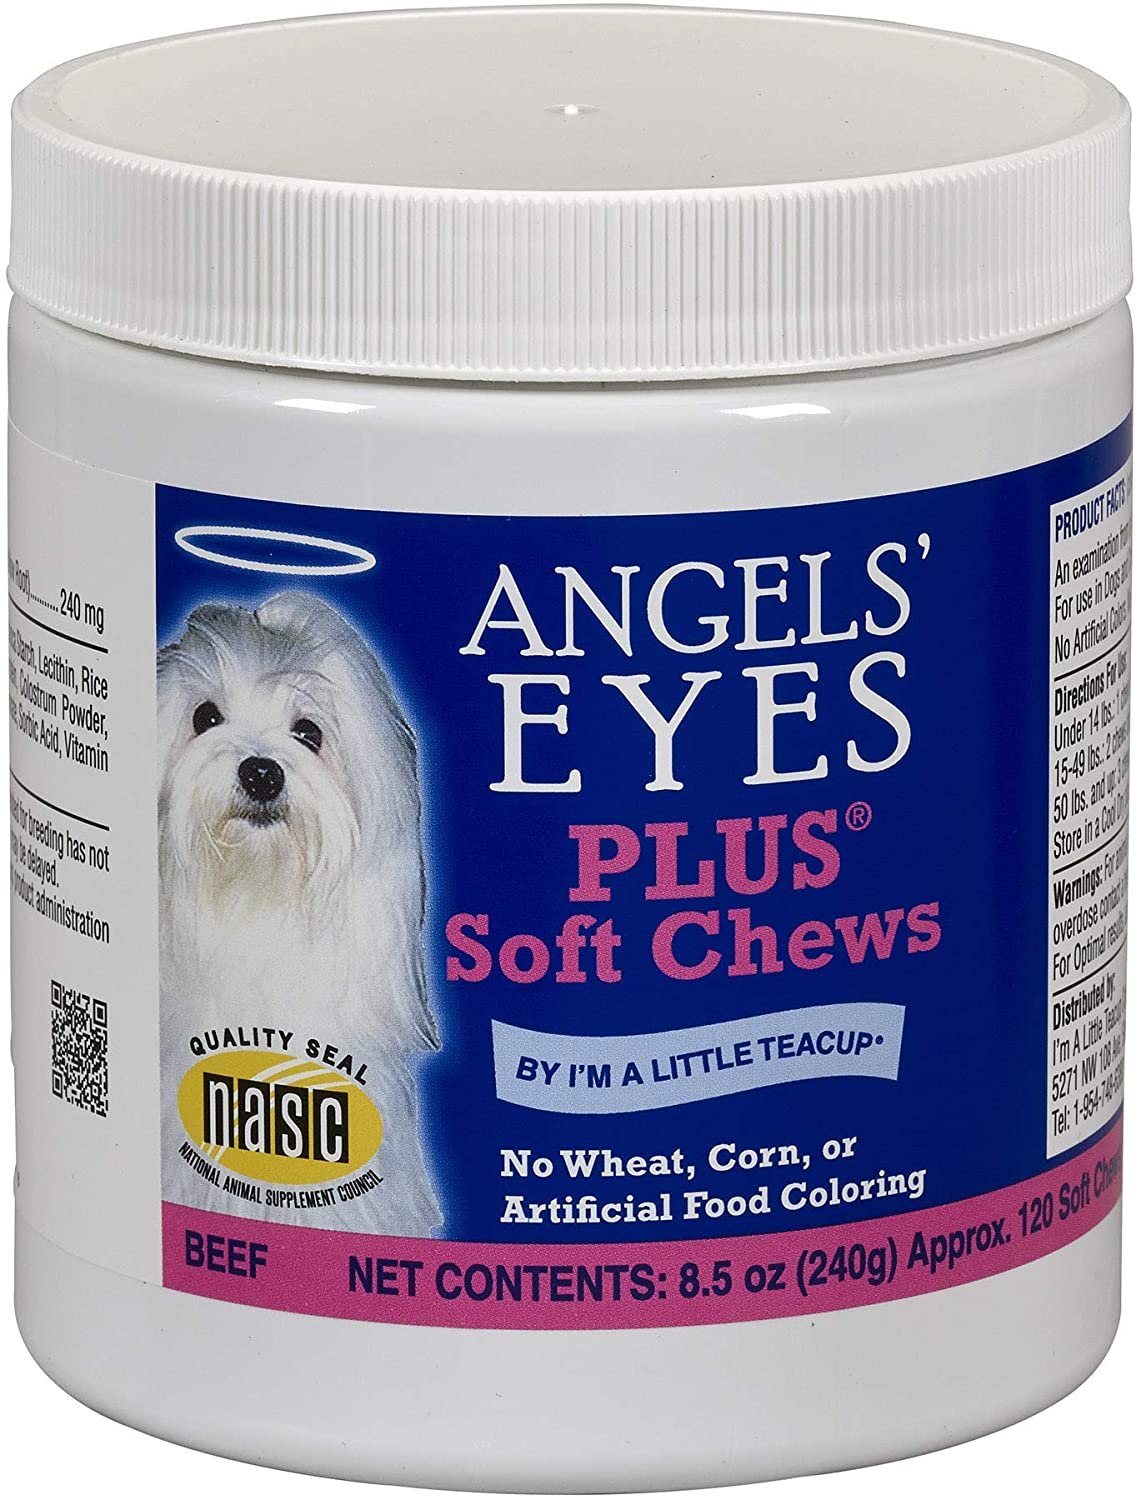 Angels' Eyes PLUS Beef Flavor Tear Stain Soft Chews 8.5 oz, Angels' Eyes